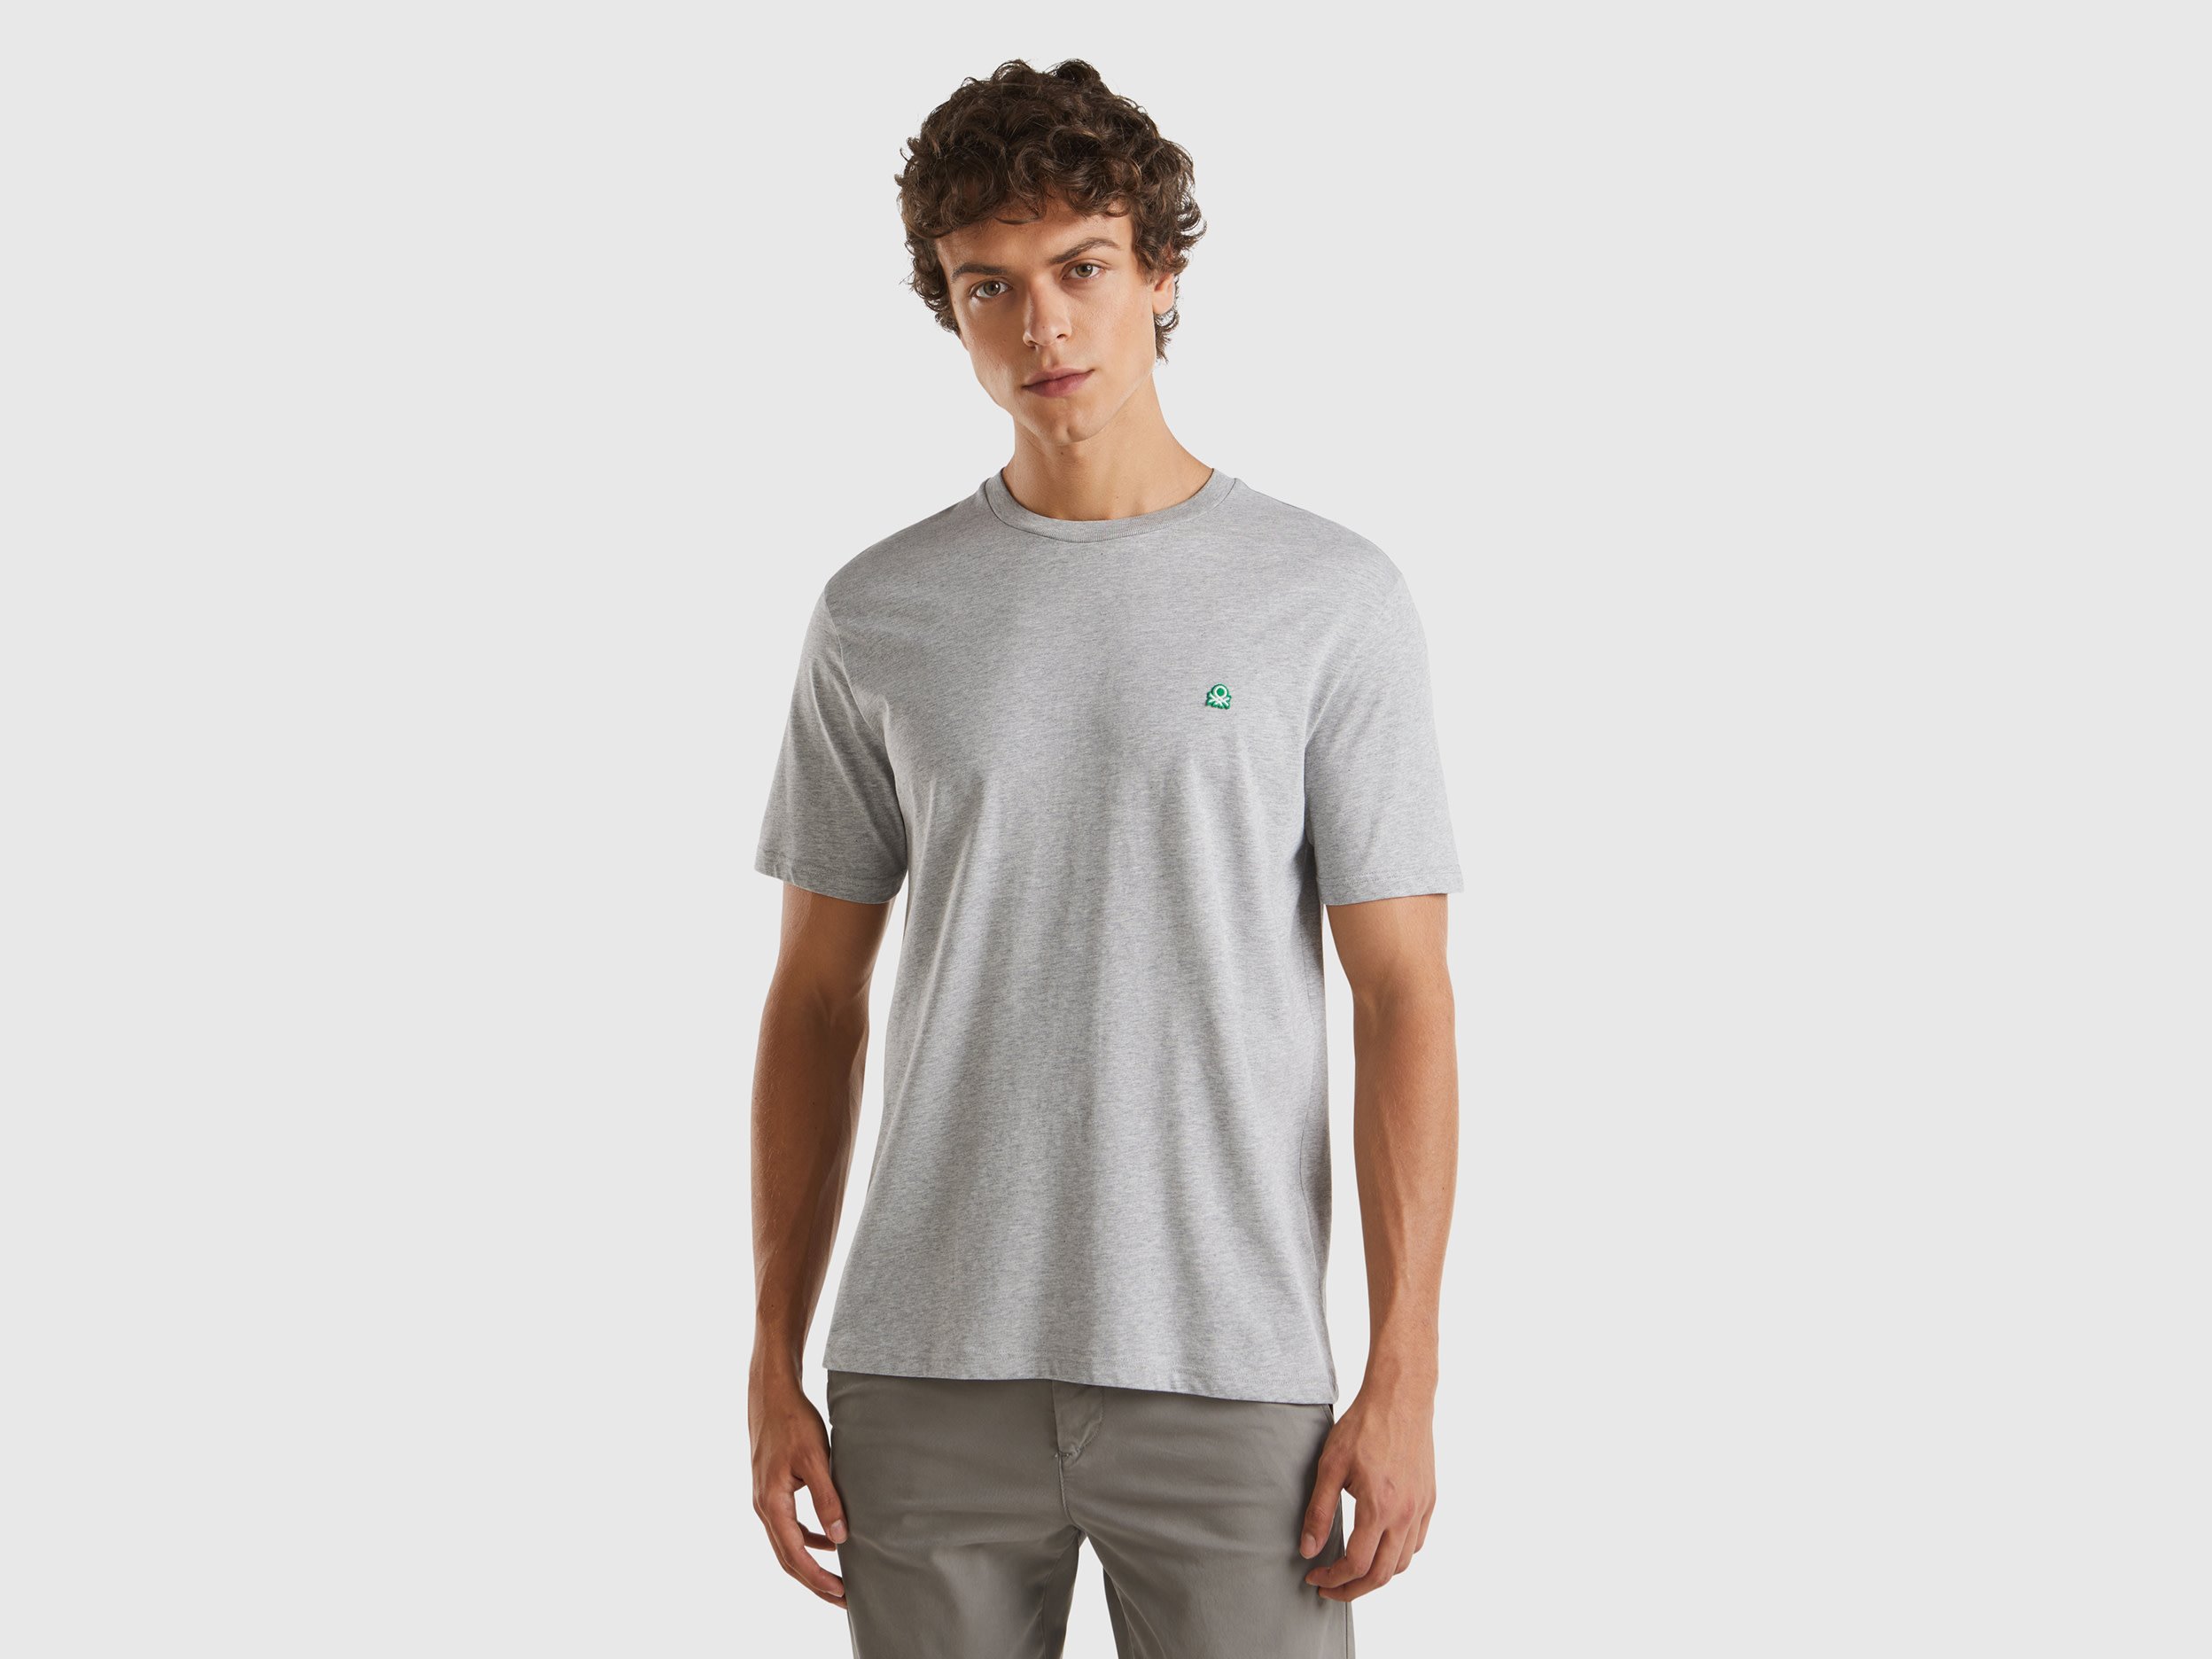 Image of Benetton, 100% Organic Cotton Basic T-shirt, size XS, Light Gray, Men